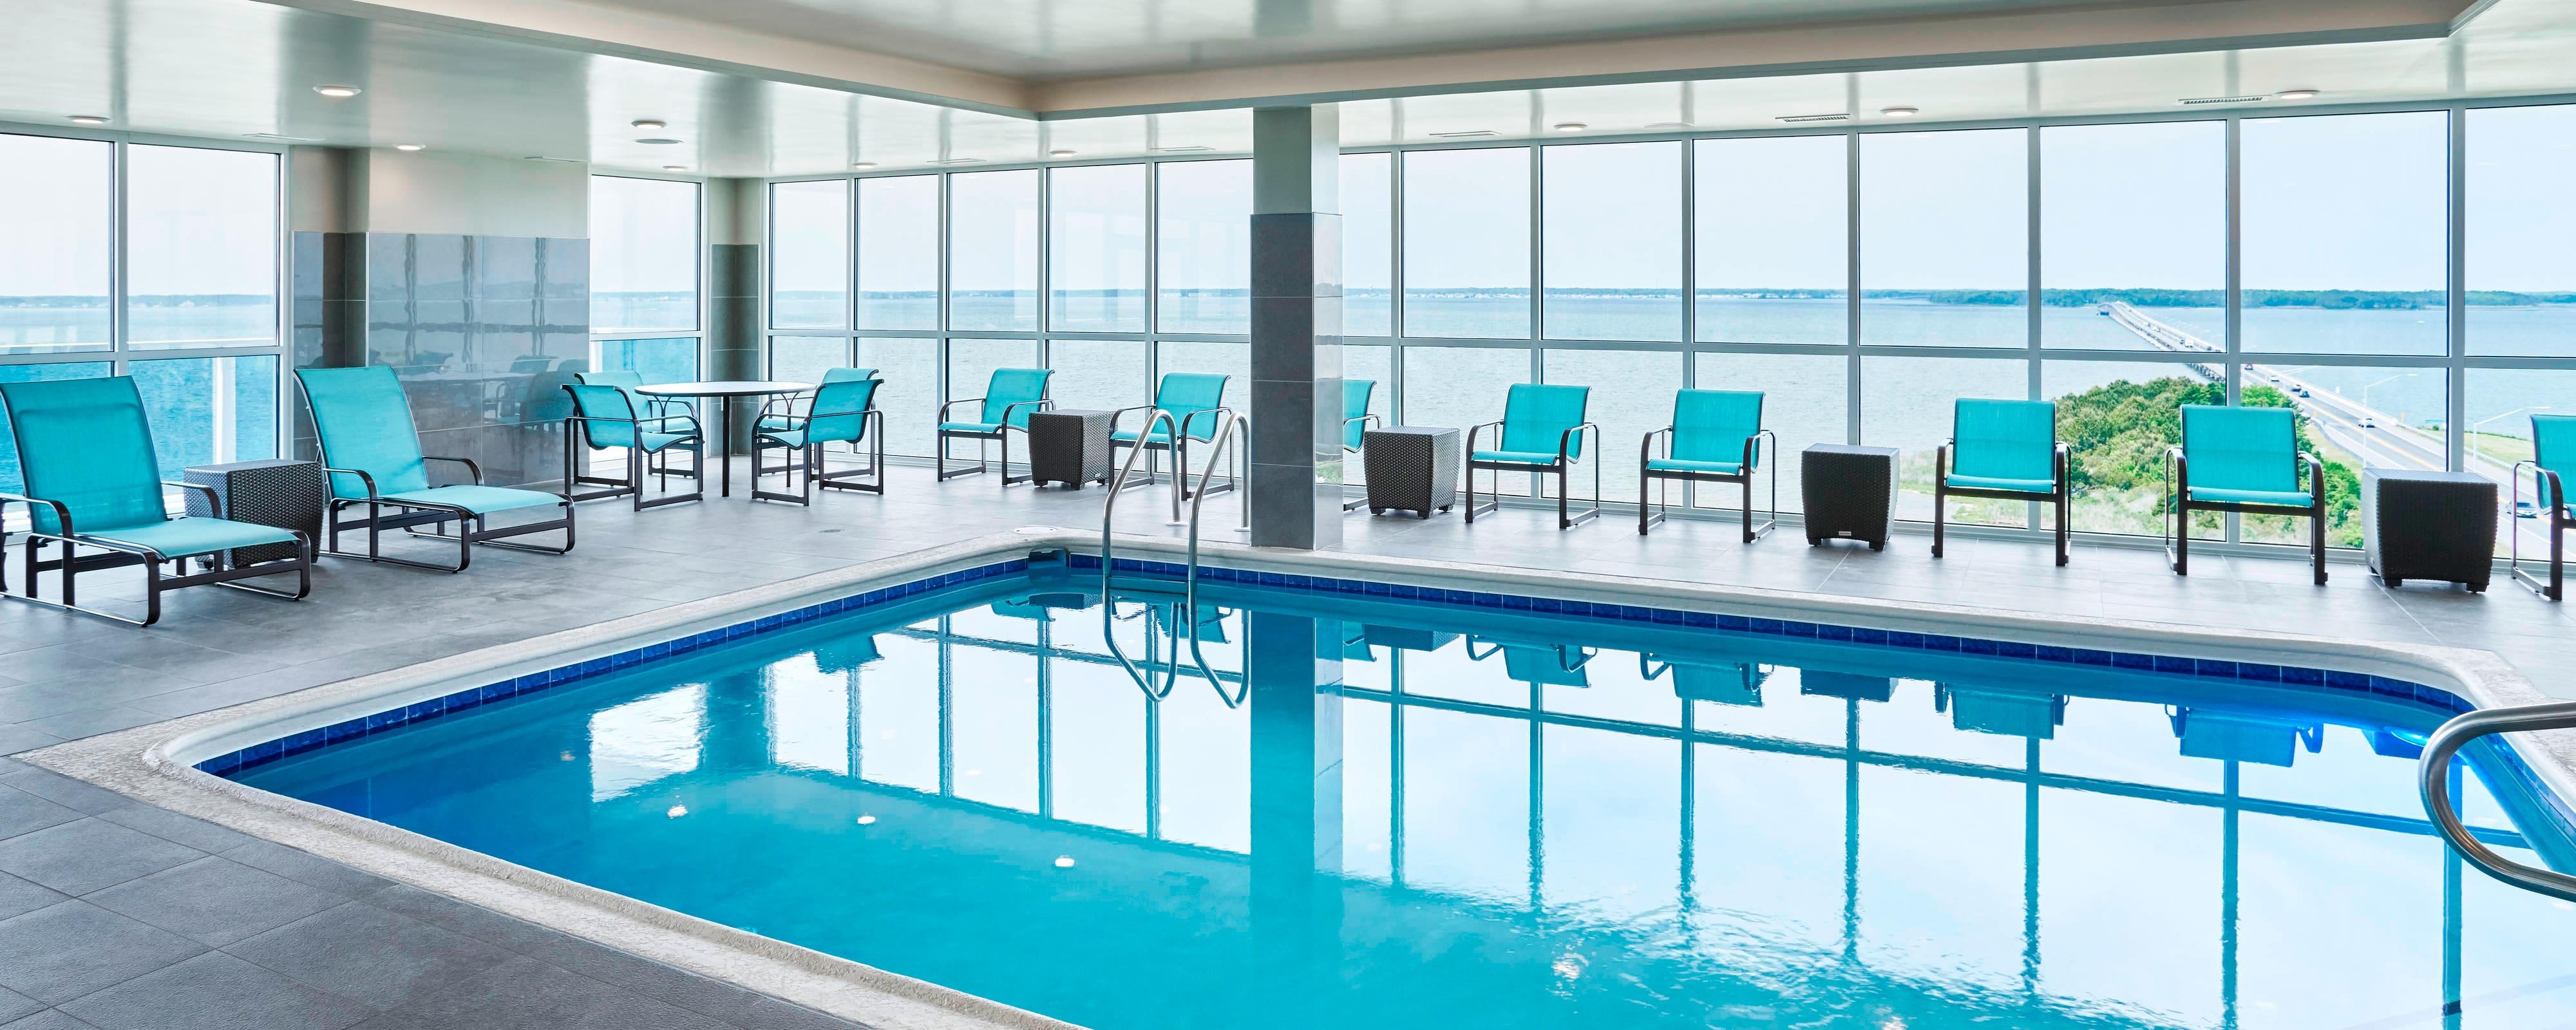 Ocean City, MD Hotel with Pool Residence Inn Ocean City